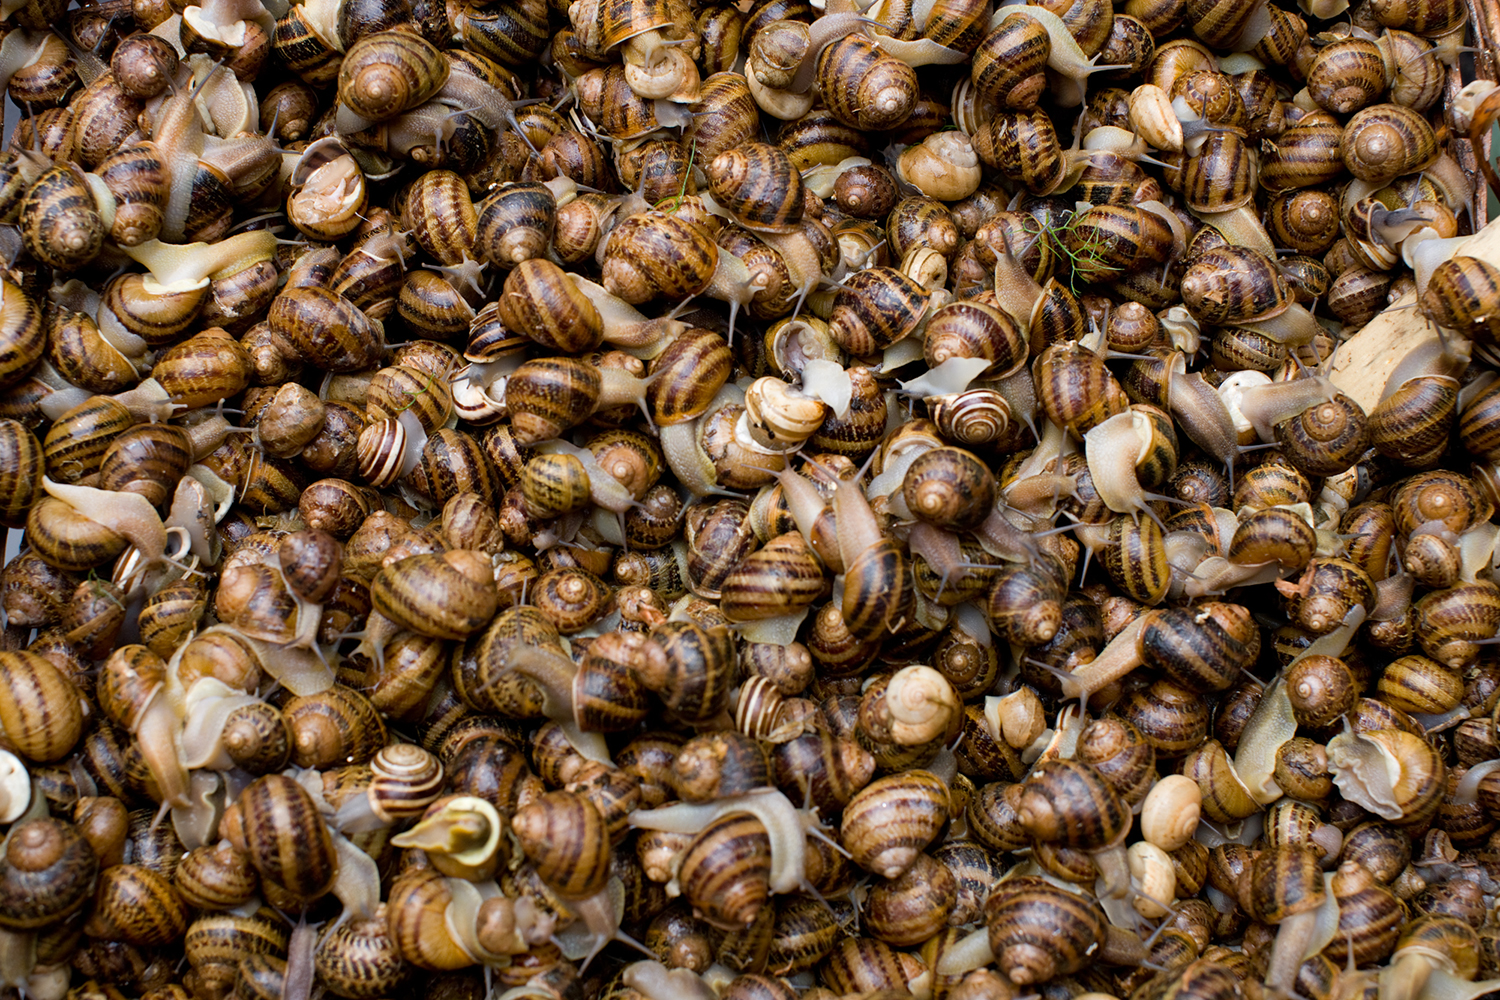  Live snails: 8 Euros per kilo. 